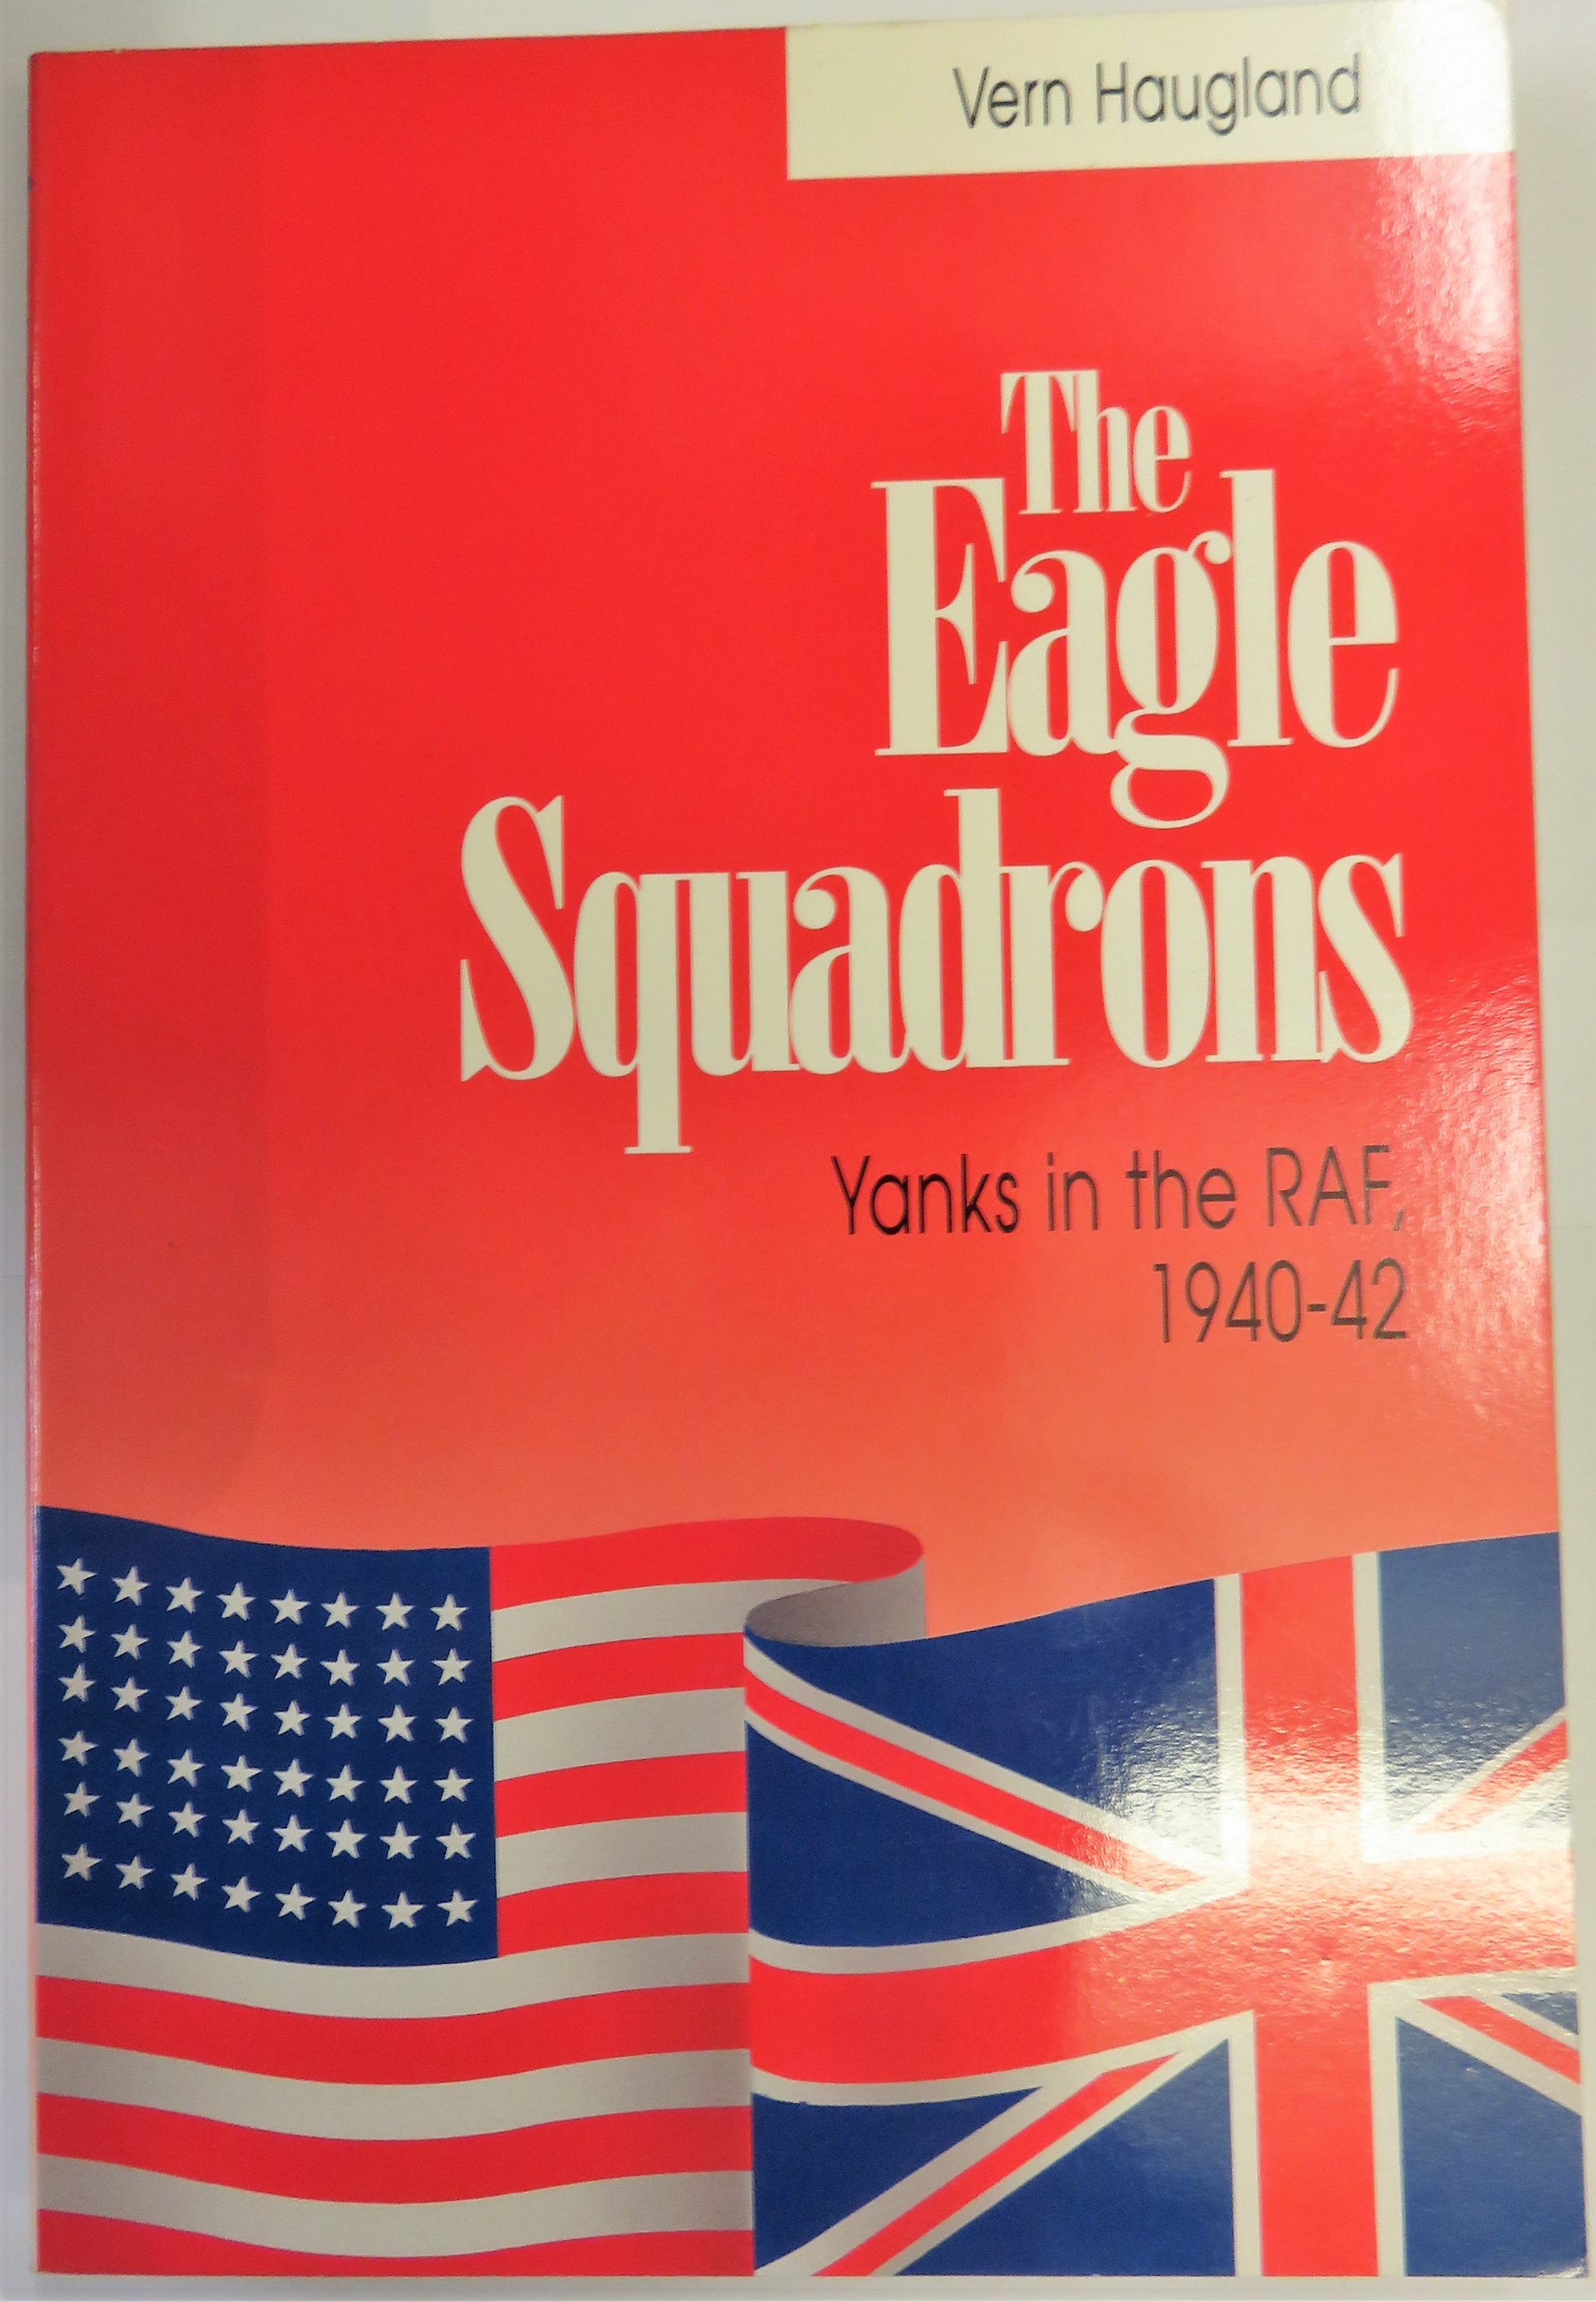 The Eagle Squadrons